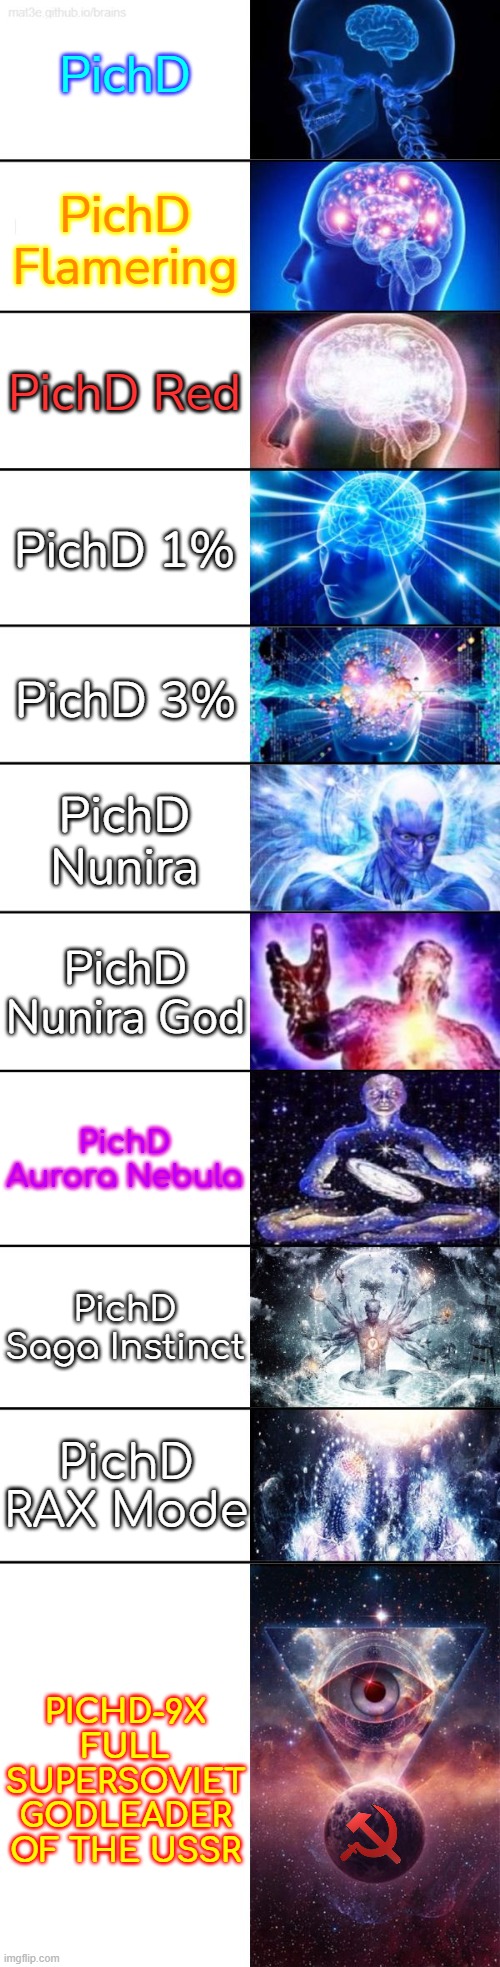 Expanding Brain (Full Template) | PichD; PichD Flamering; PichD Red; PichD 1%; PichD 3%; PichD Nunira; PichD Nunira God; PichD Aurora Nebula; PichD Saga Instinct; PichD RAX Mode; PICHD-9X FULL SUPERSOVIET GODLEADER OF THE USSR | image tagged in expanding brain full template | made w/ Imgflip meme maker